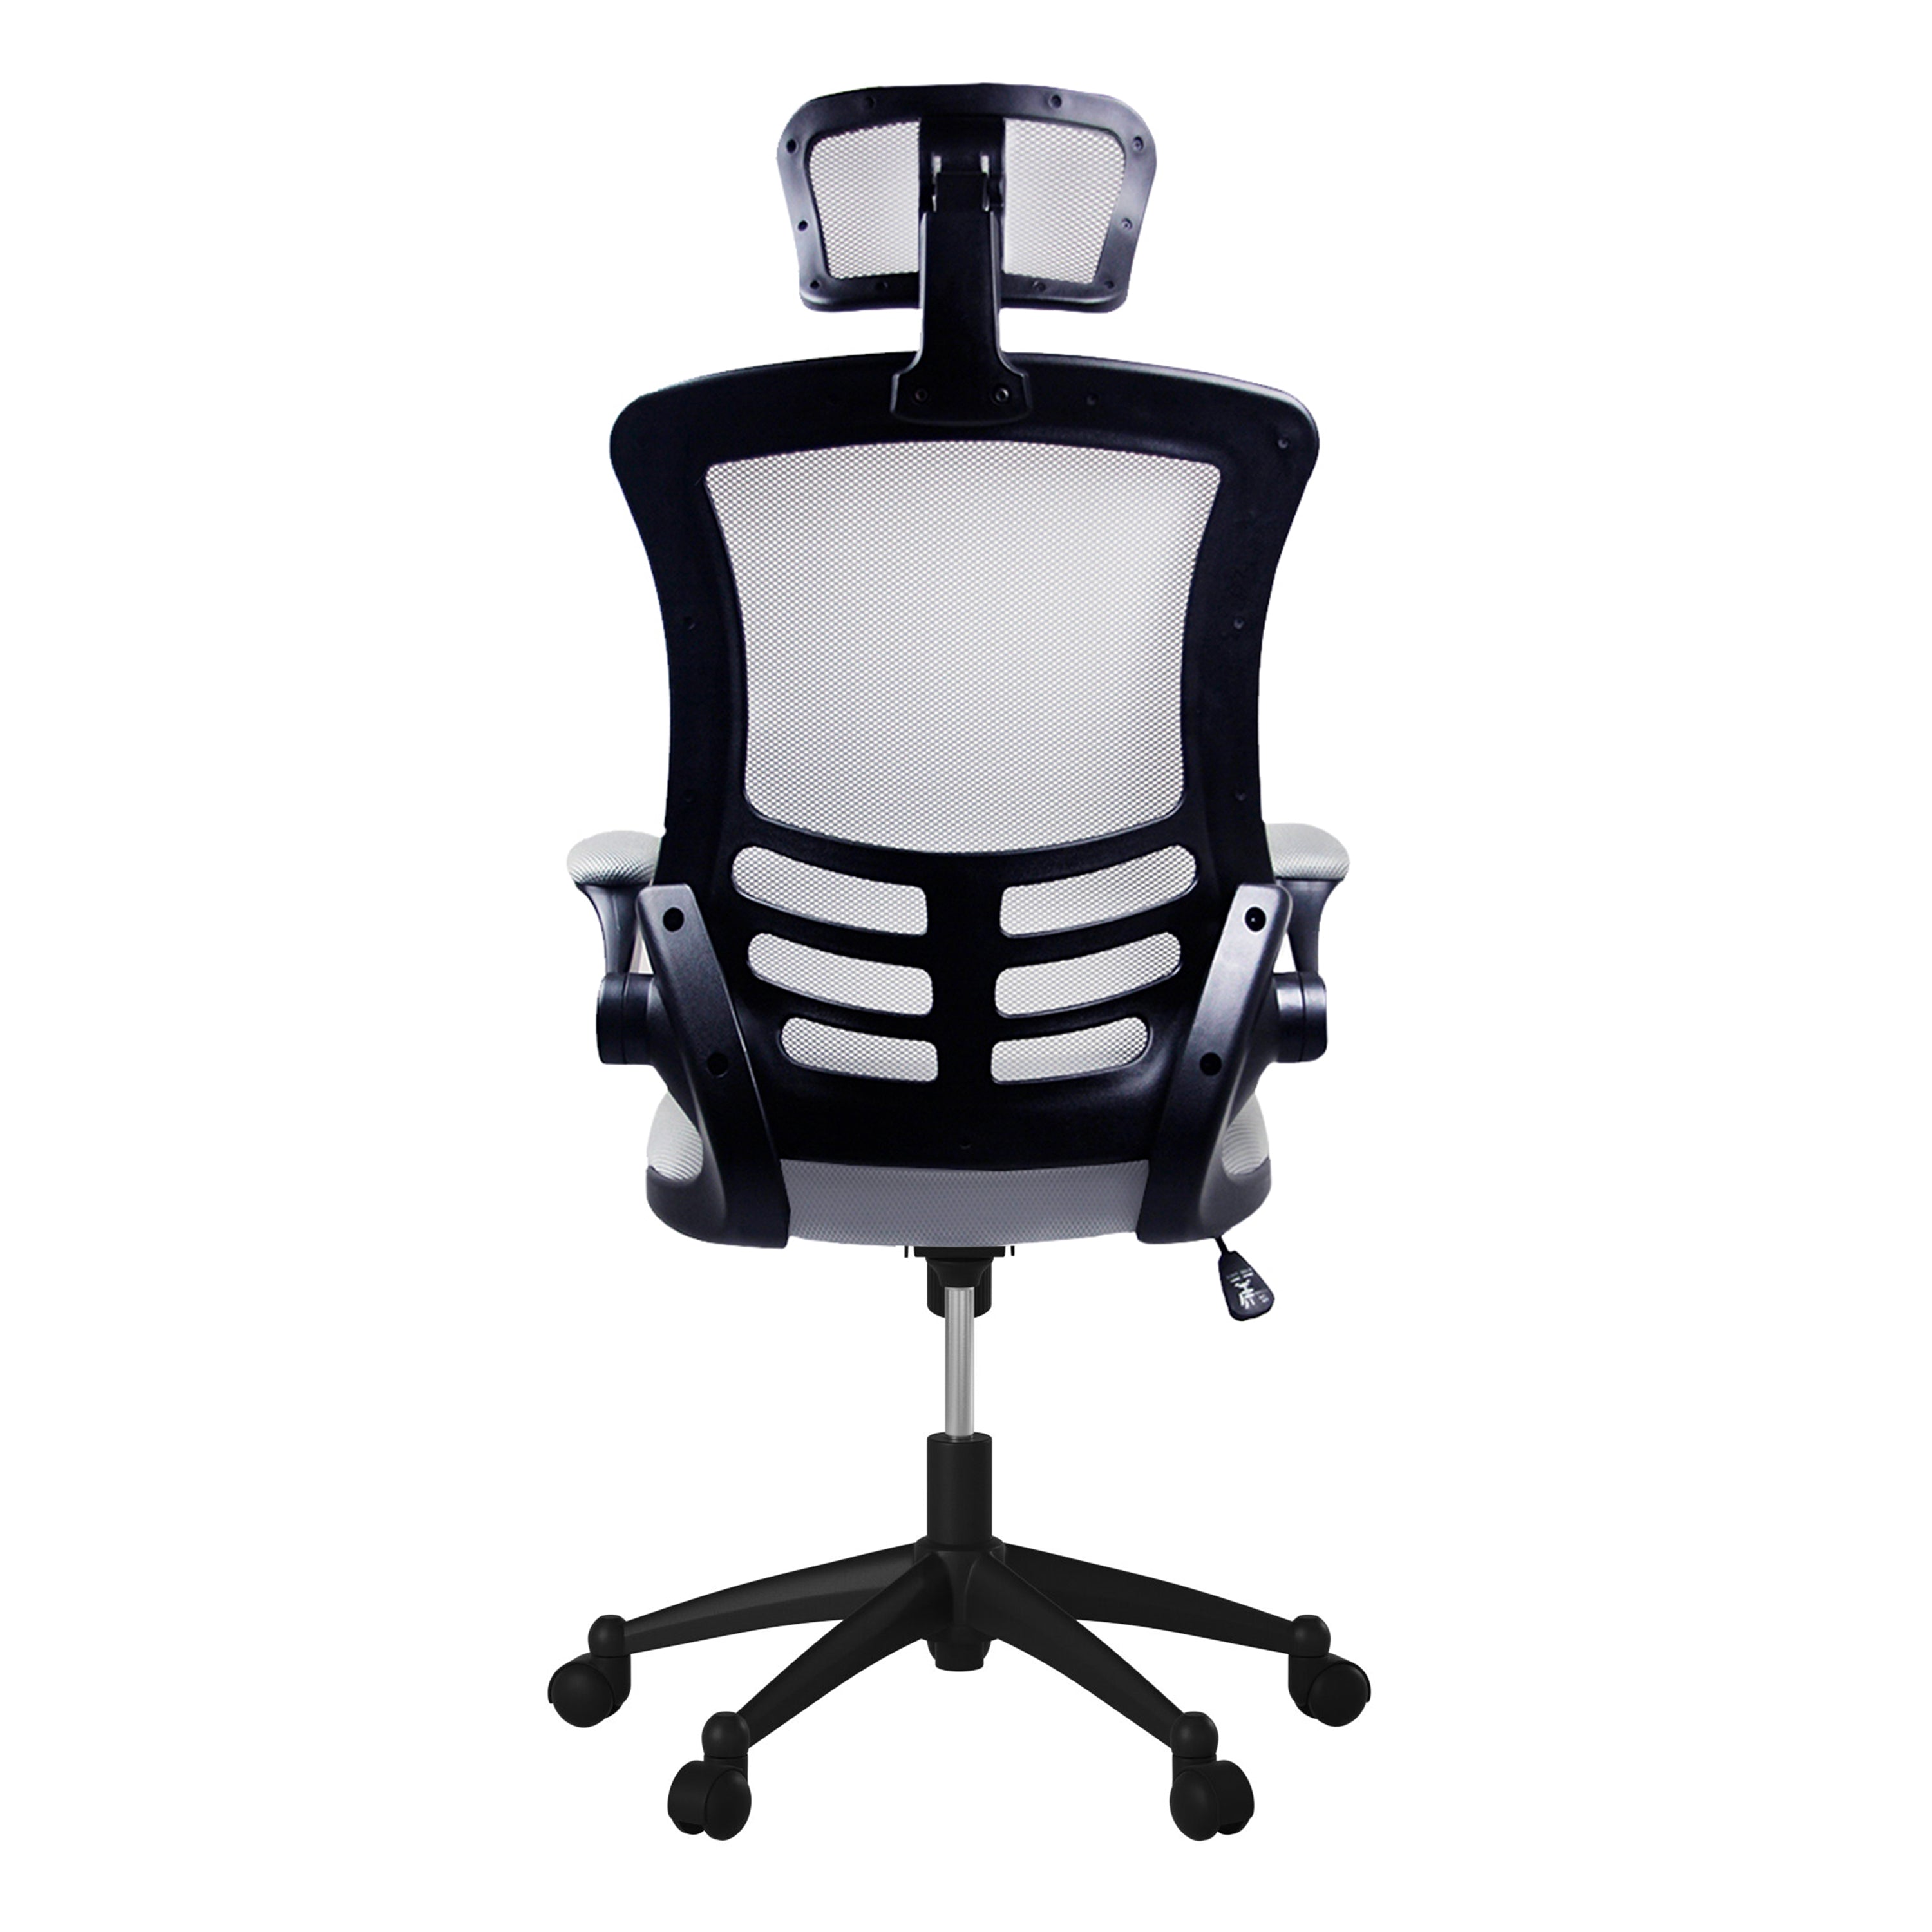 Techni Mobili Executive High Back Chair with Headrest Black